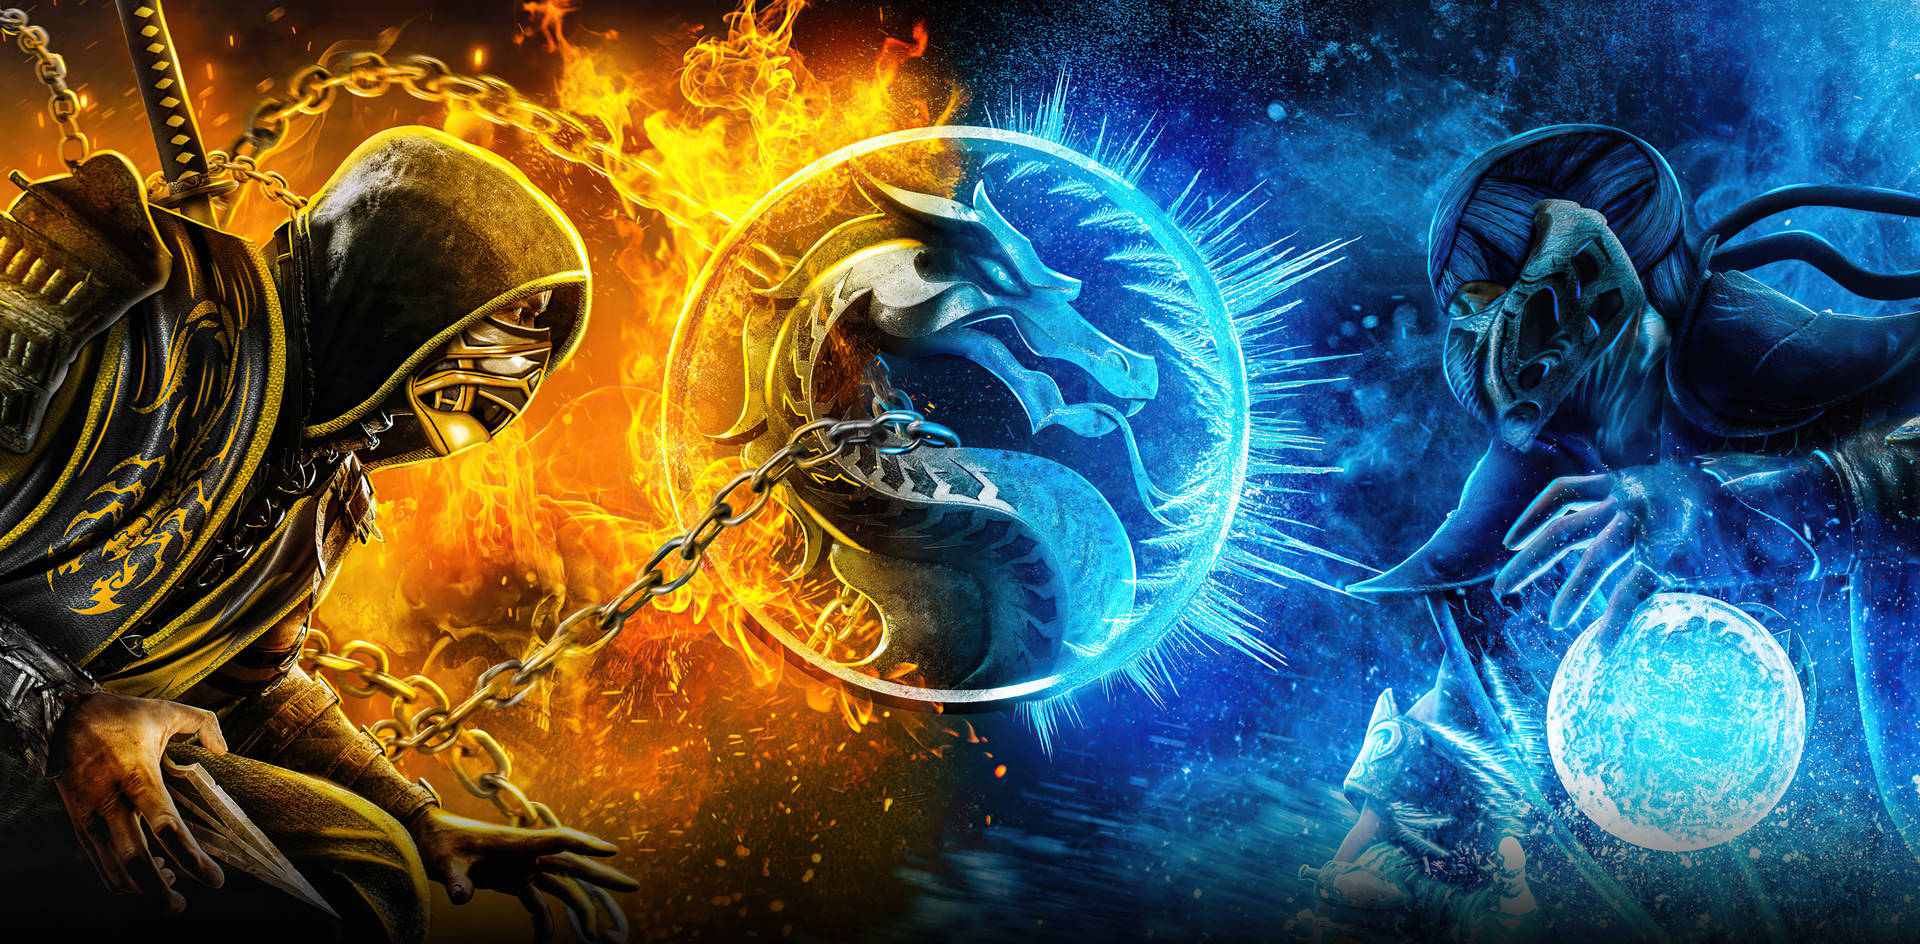 Bright Mortal Kombat Scorpion Vs Sub Zero Wallpaper